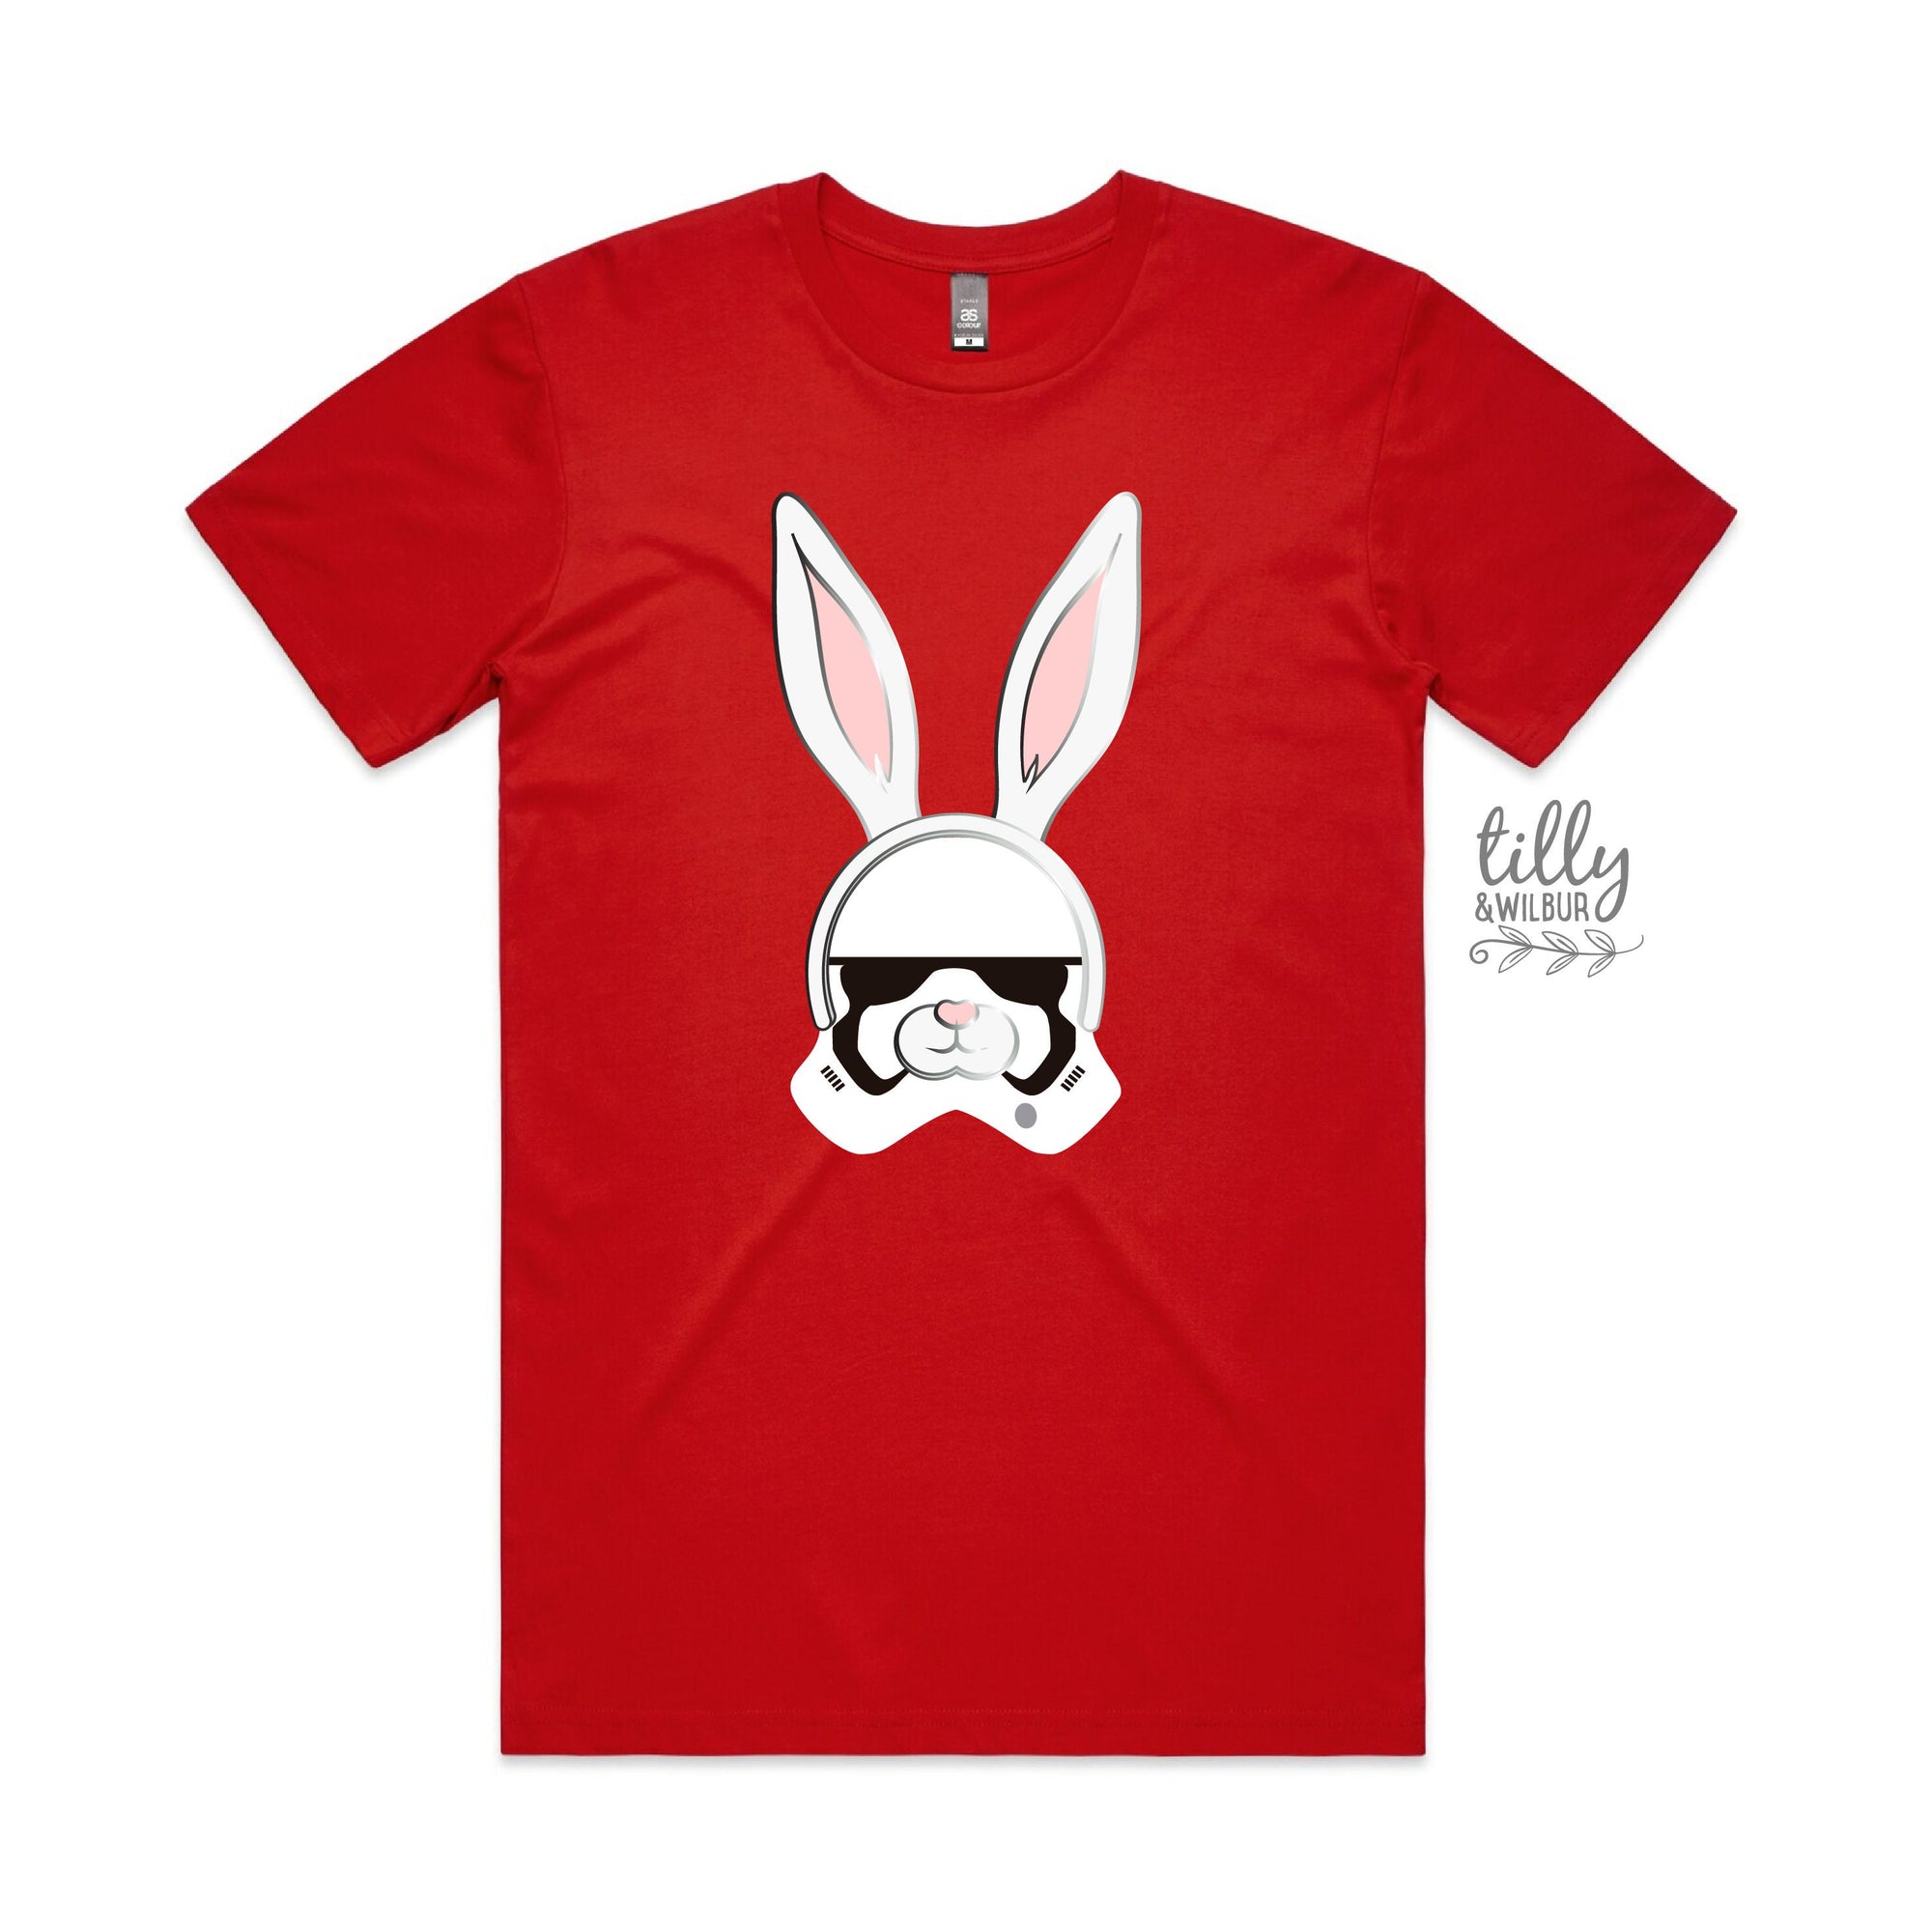 Easter Star Wars Stormtrooper T-Shirt For Men, Easter Shirt, Star Wars T-Shirt, Men's Easter Gift, Men's Easter Shirt, Stormtrooper T-Shirt